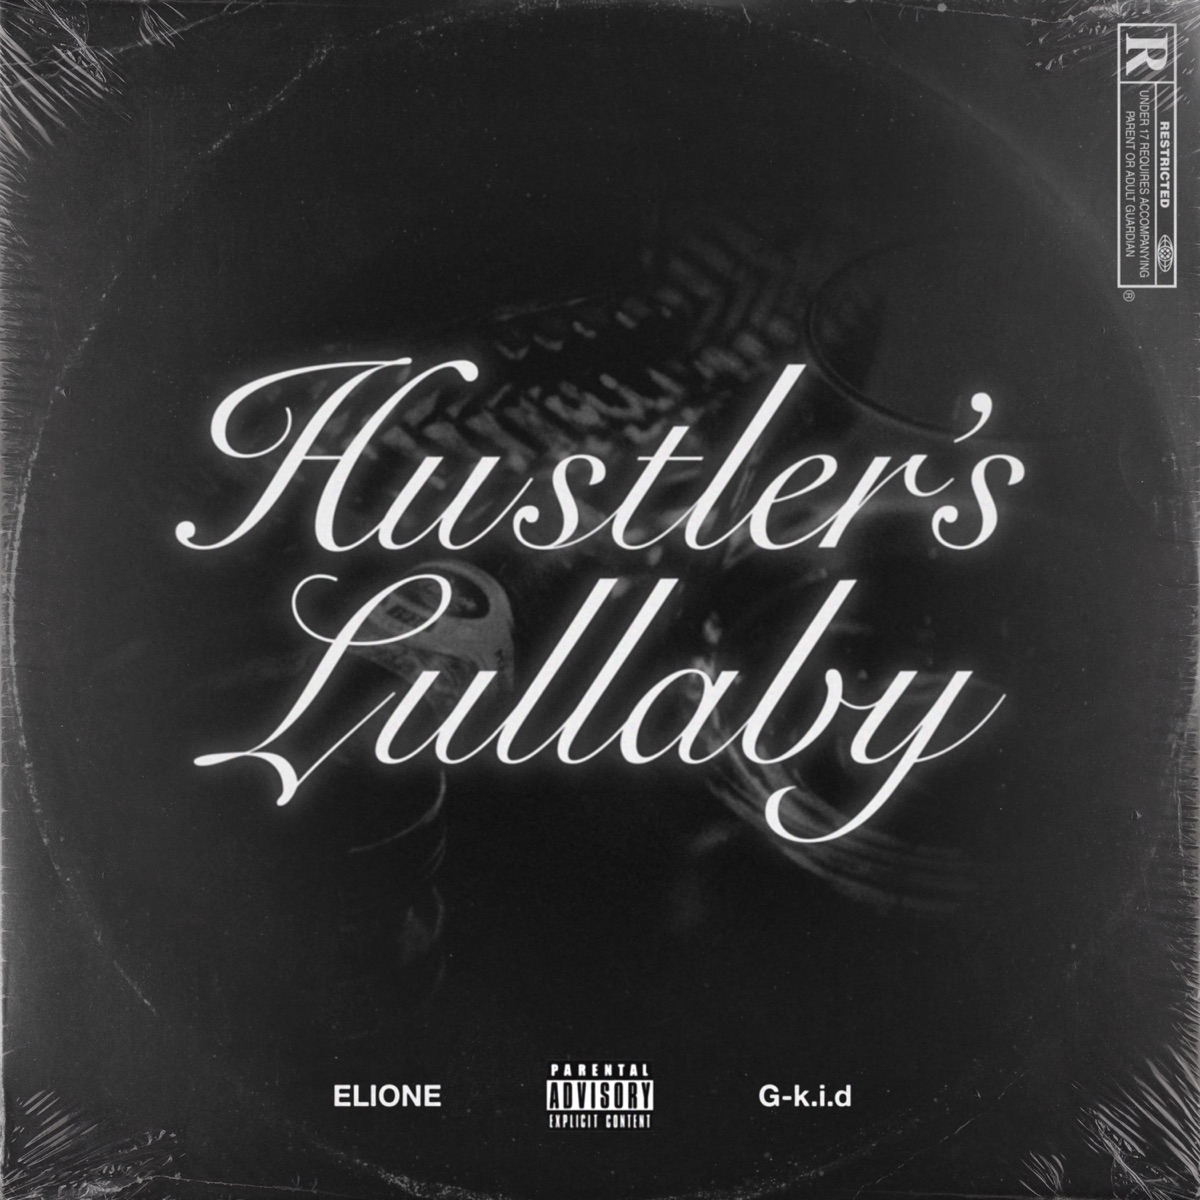 『ELIONE - Hustler's Lullaby (feat. G-k.i.d) 歌詞』収録の『Hustler's Lullaby (feat. G-k.i.d)』ジャケット